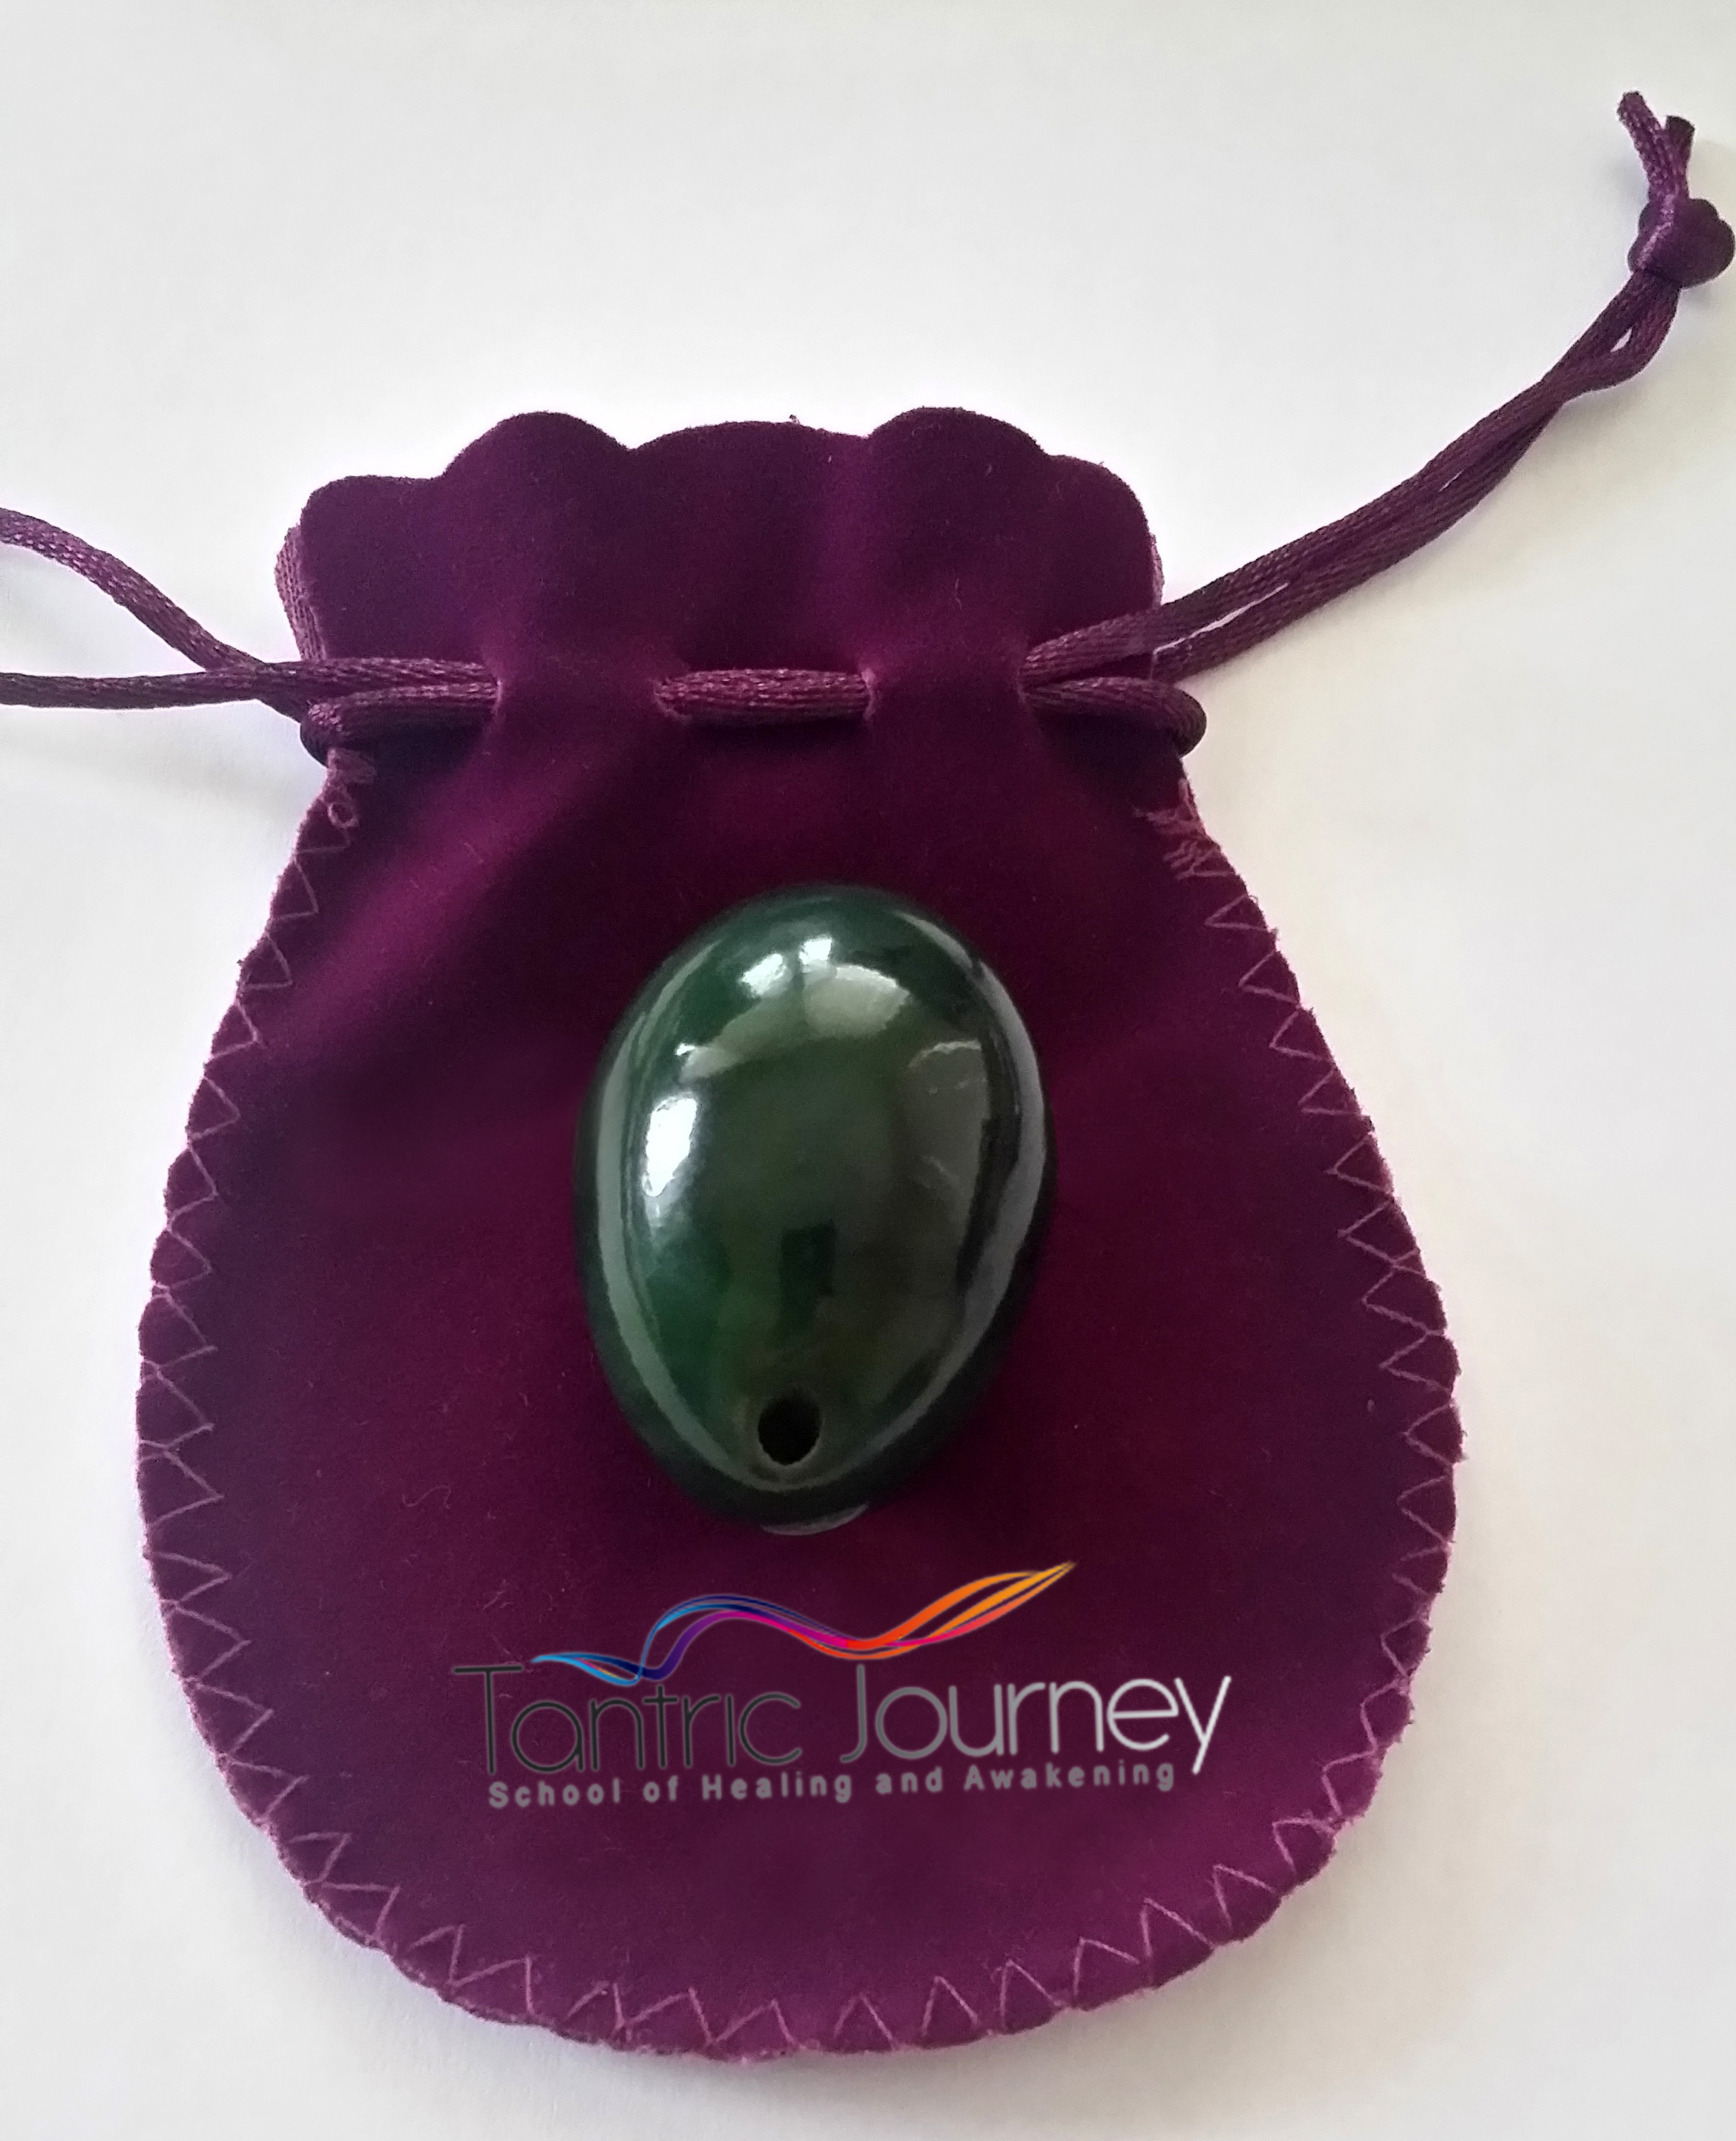 Jade egg Tantric Journey